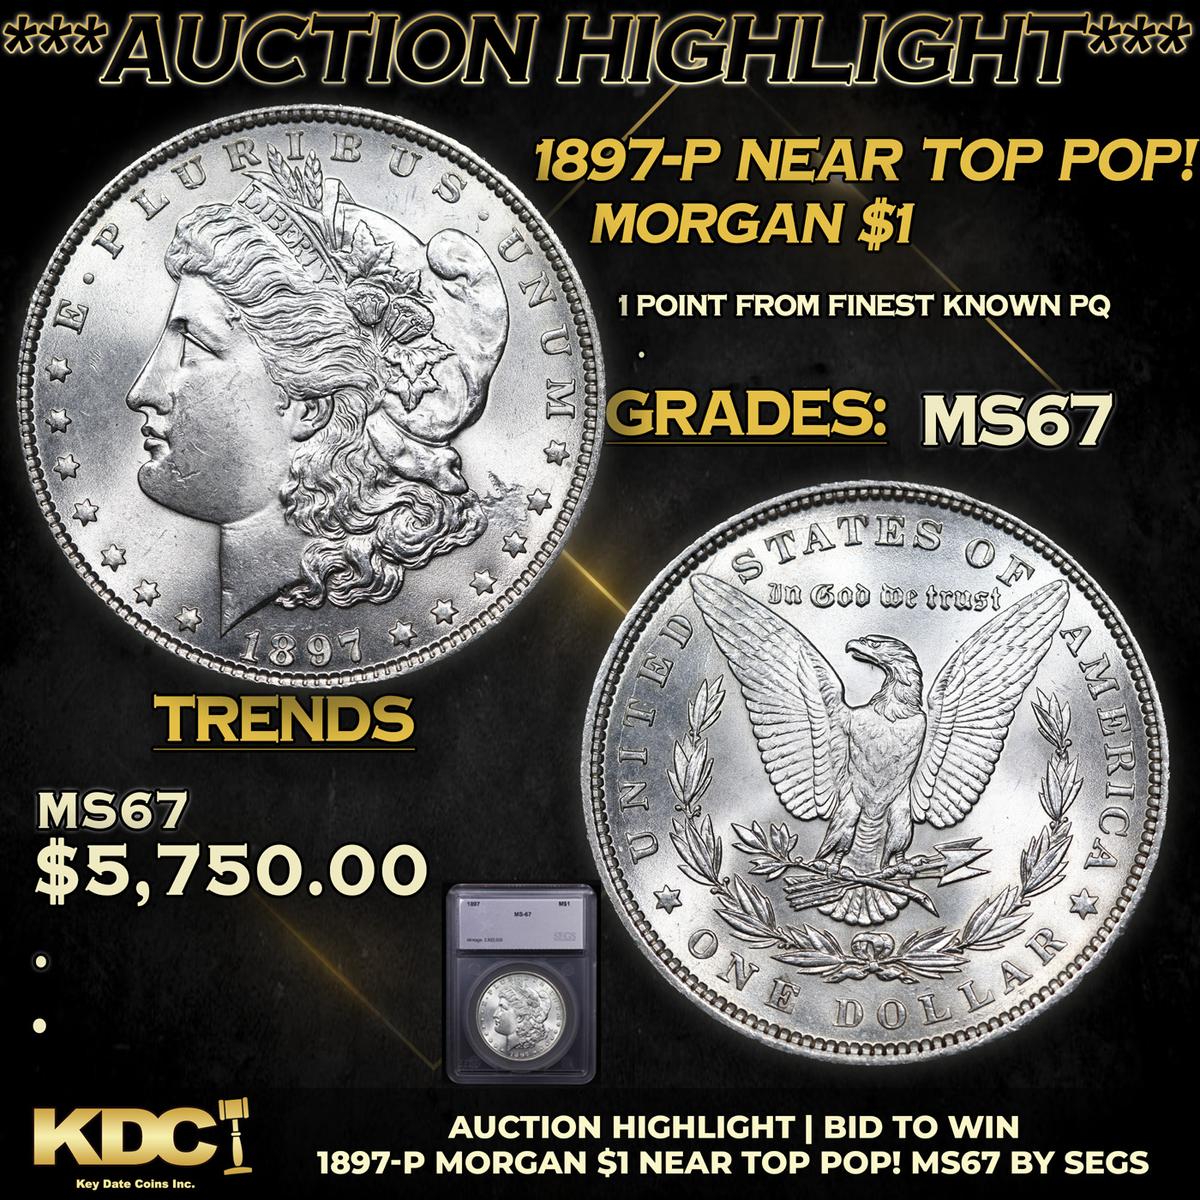 ***Auction Highlight*** 1897-p Morgan Dollar Near Top Pop! $1 Graded ms67 By SEGS (fc)